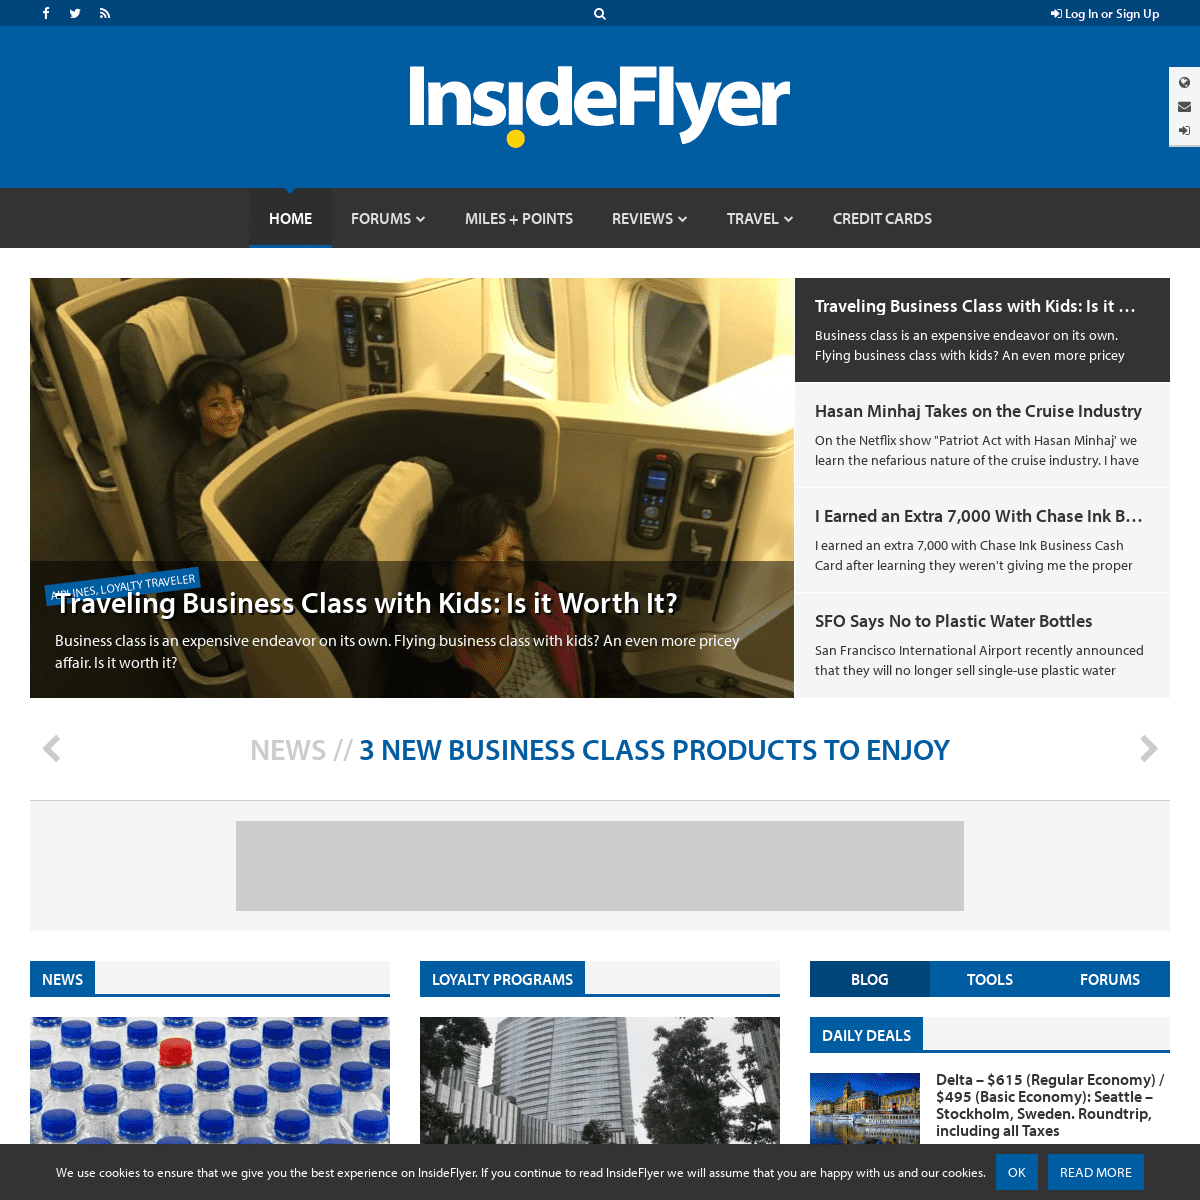 A complete backup of insideflyer.com